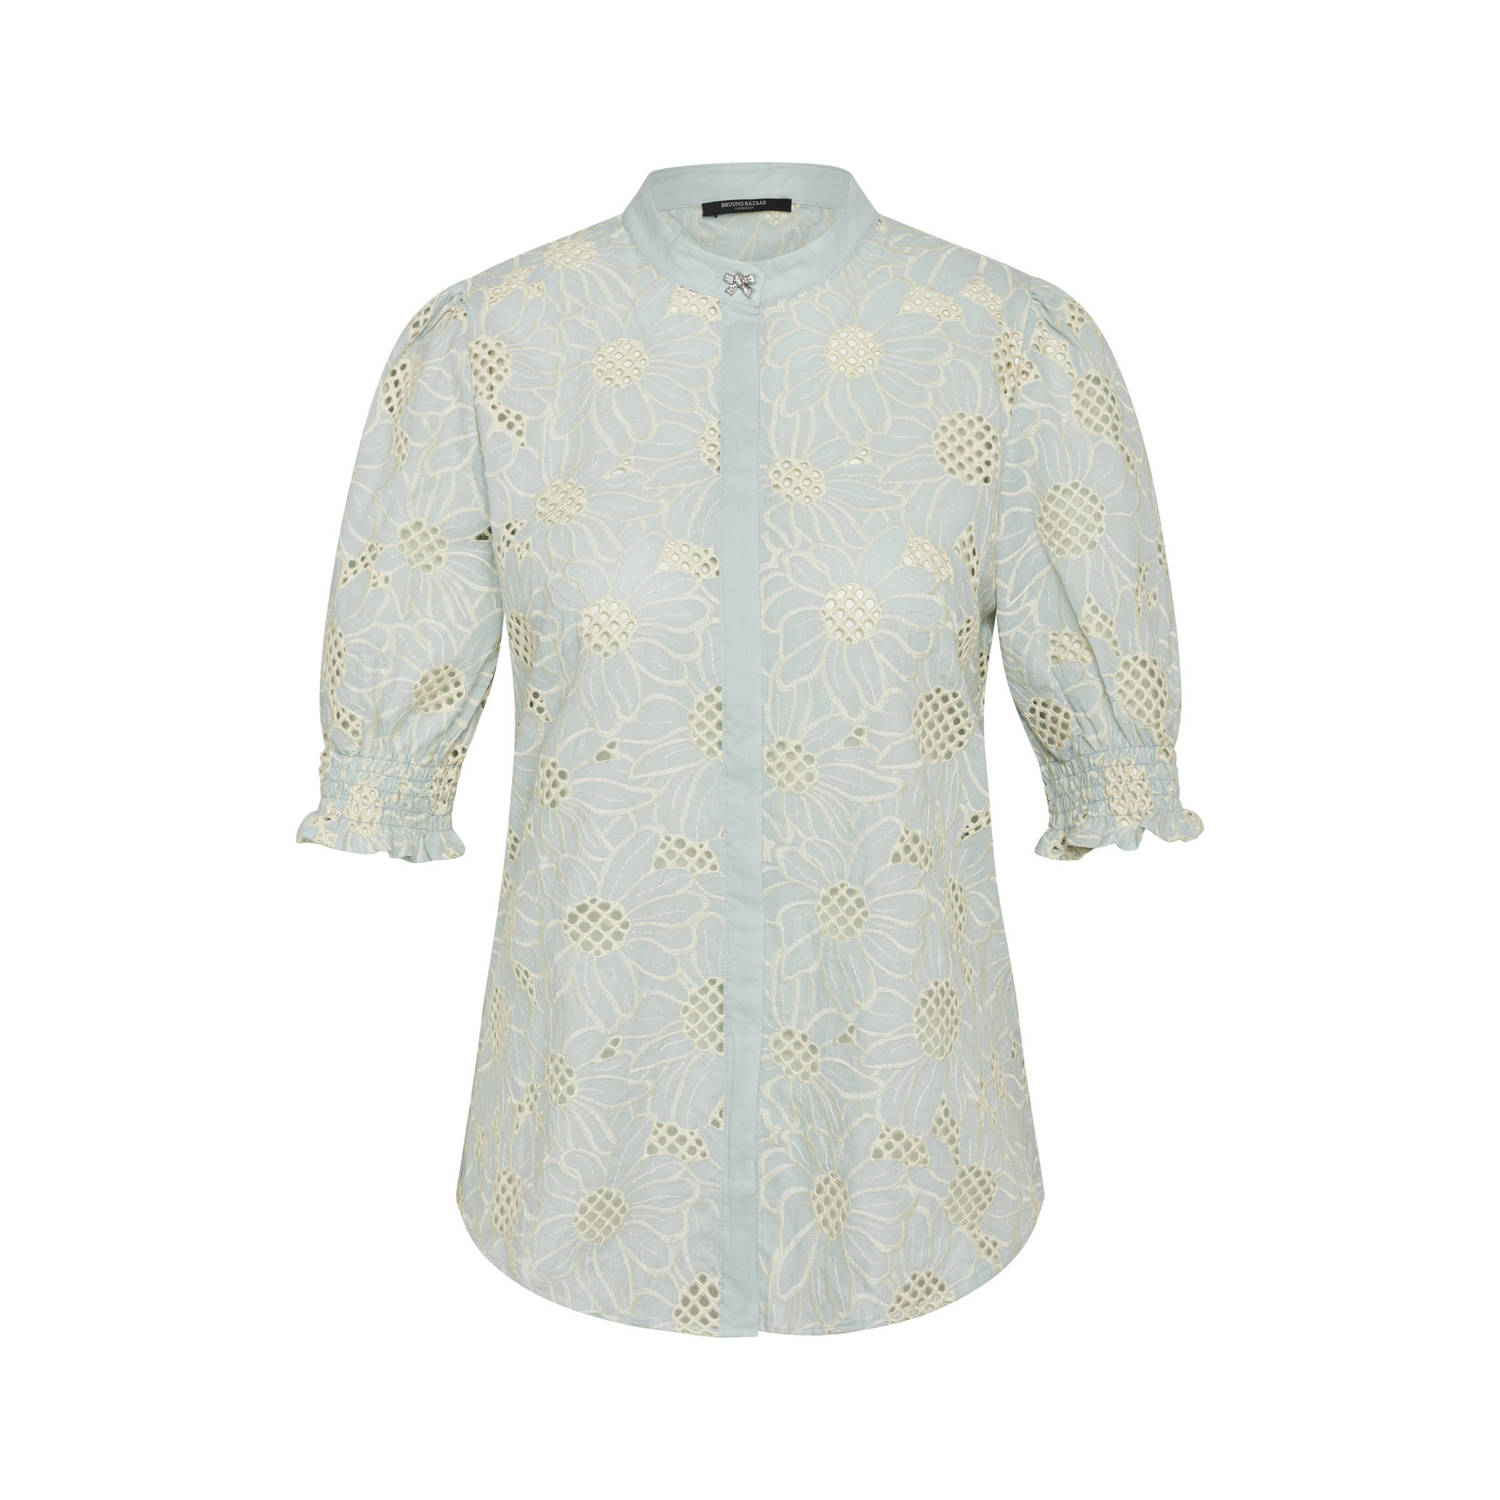 Bruuns Bazaar gebloemde blouse lichtblauw ecru